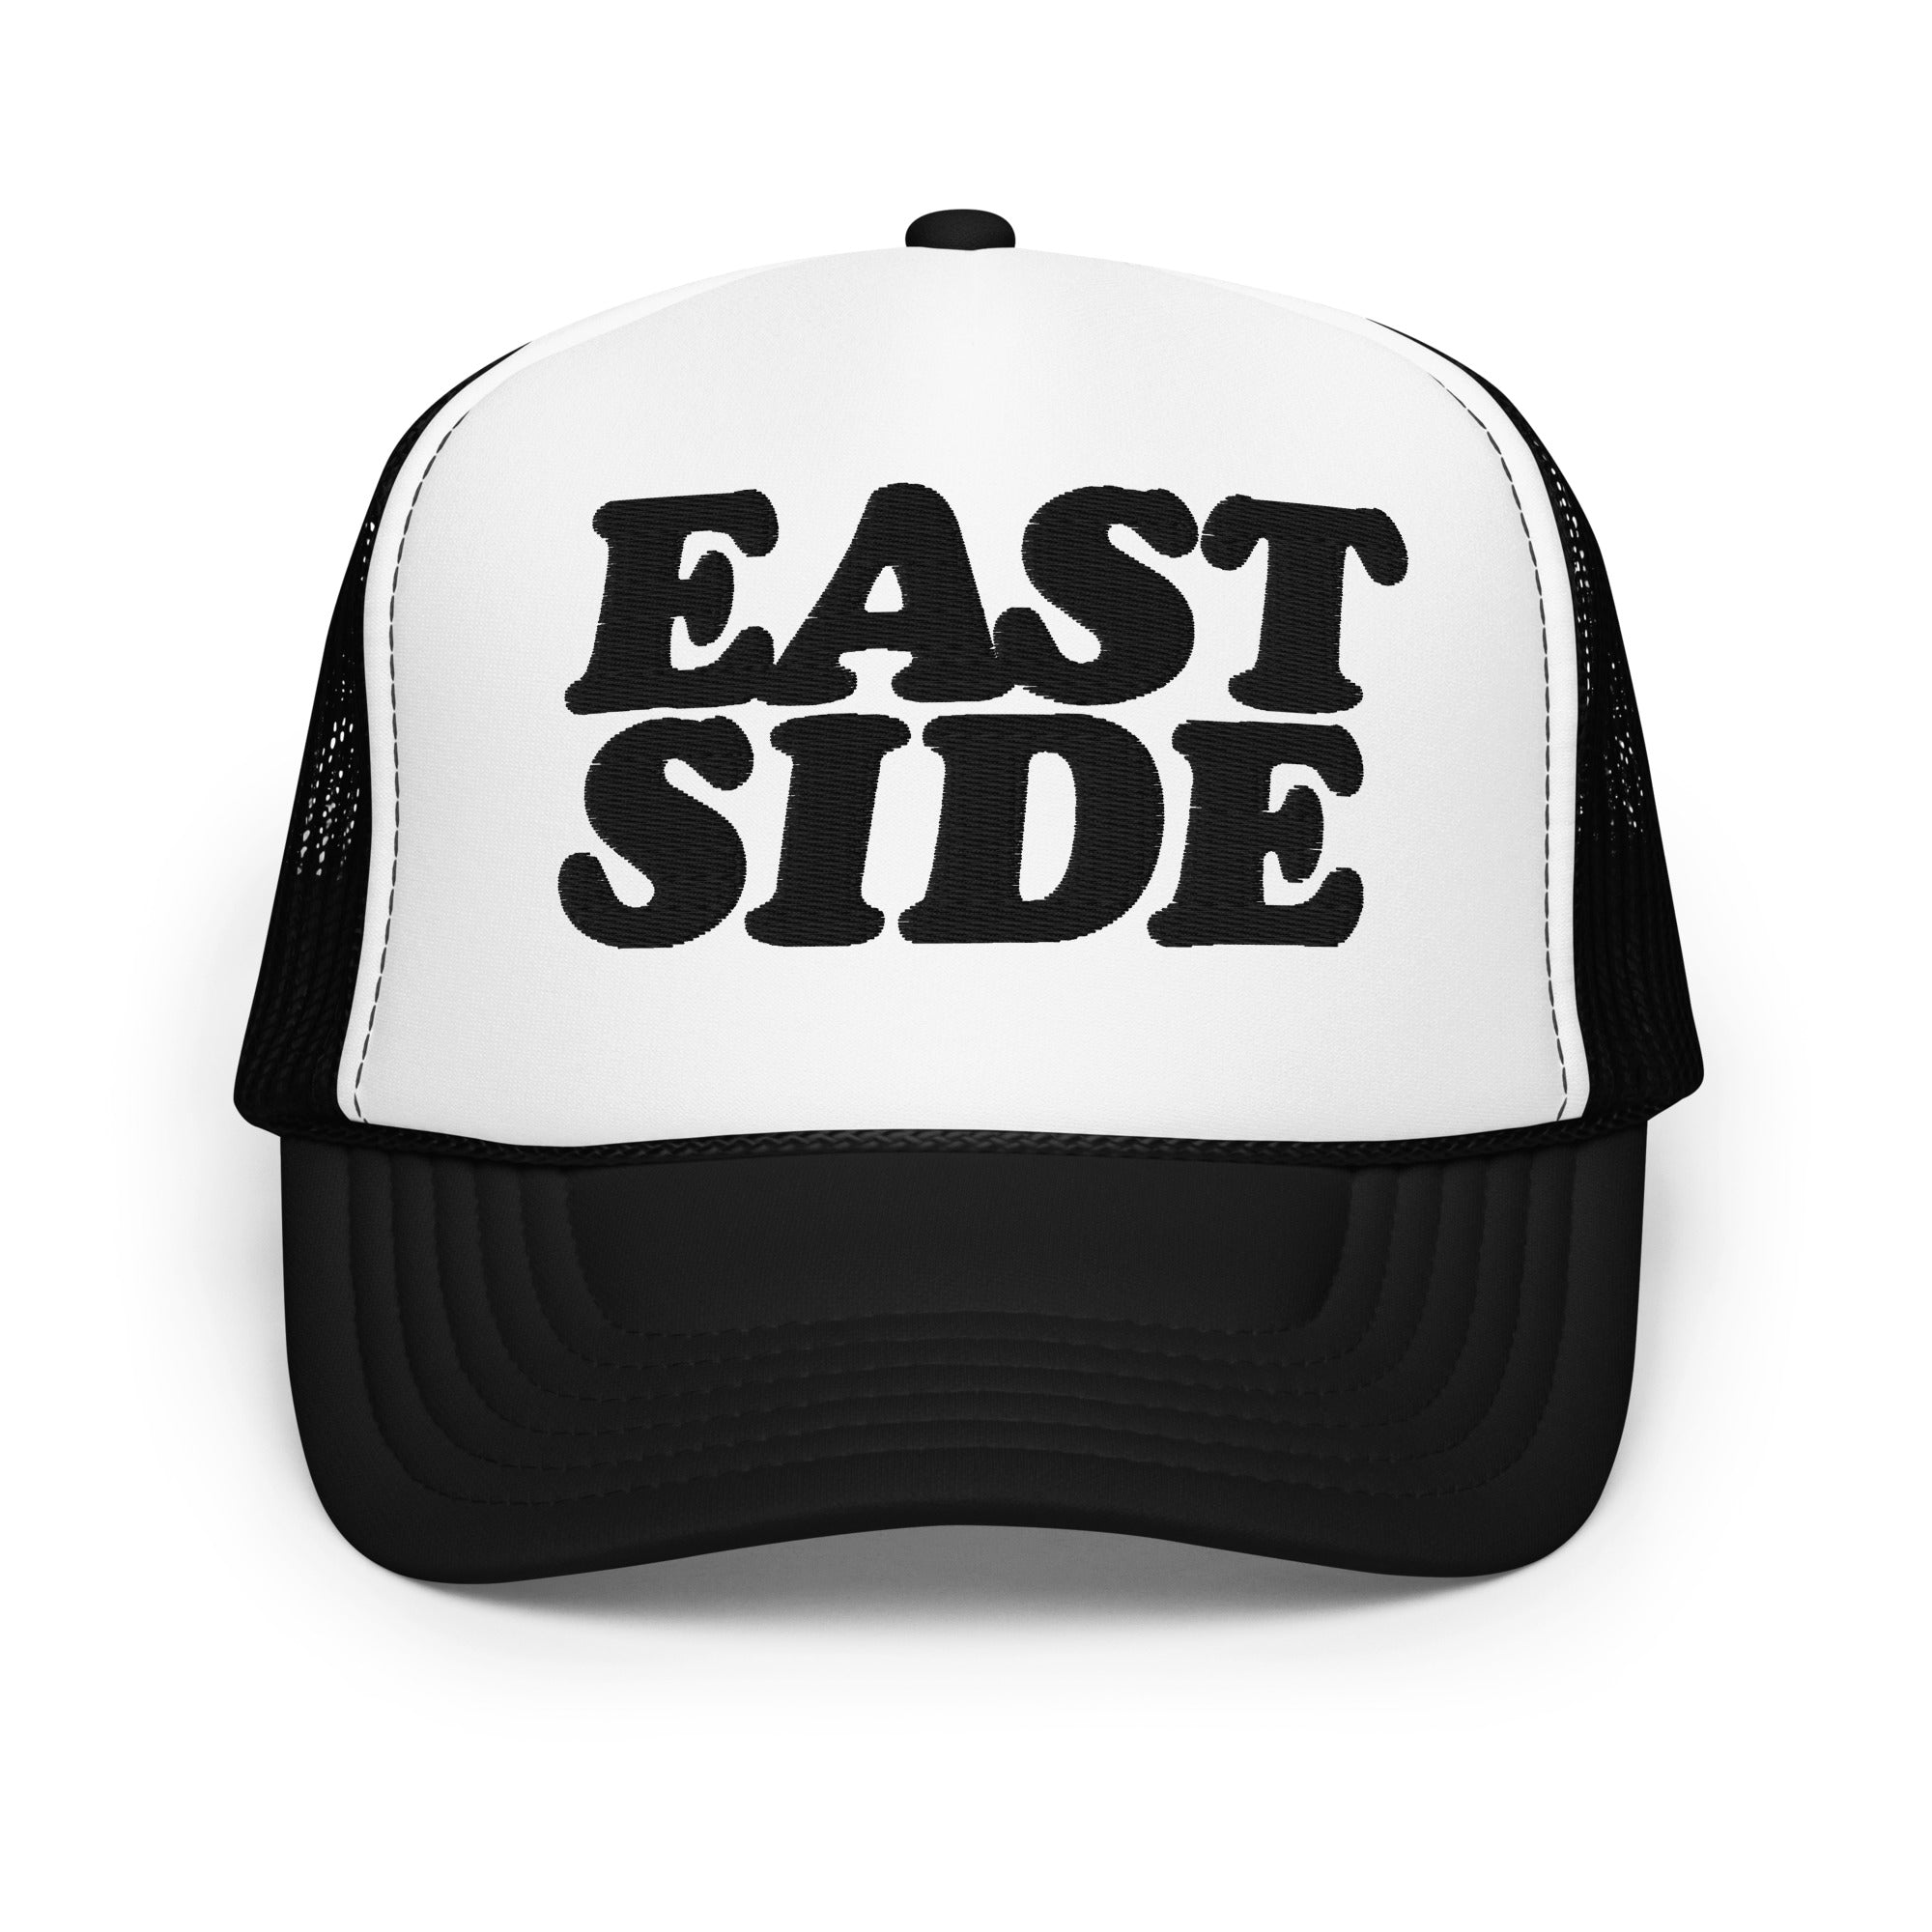 East Side Foam Trucker Hat - Embroidered - Black / White  Default Title  